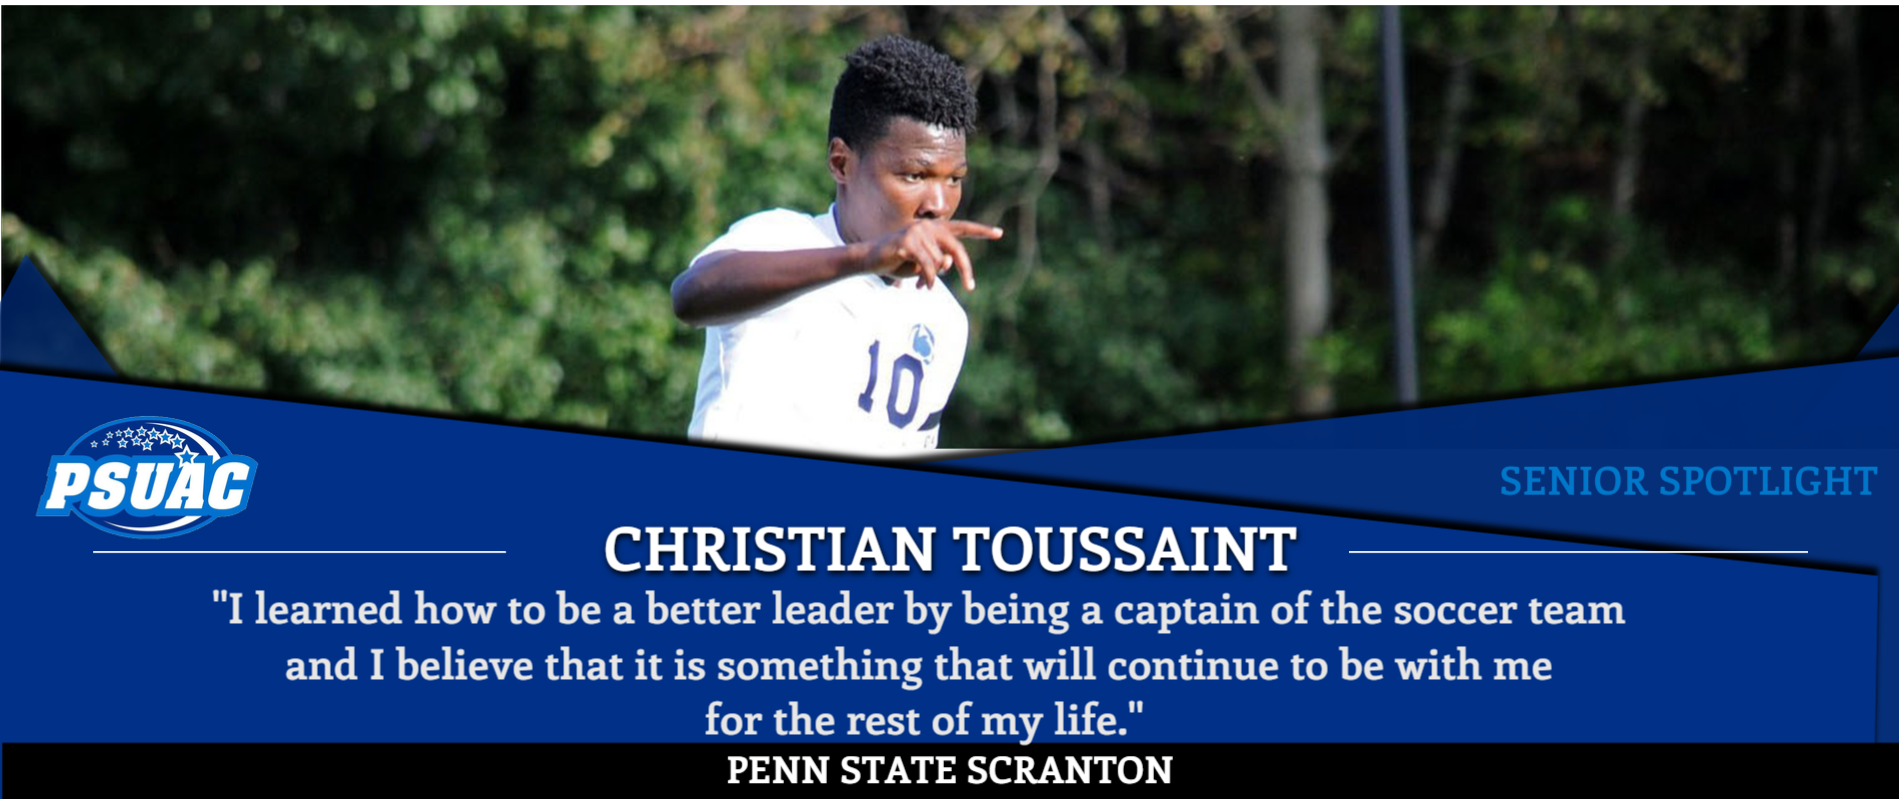 Penn State Scranton's Crhistian Toussaint.